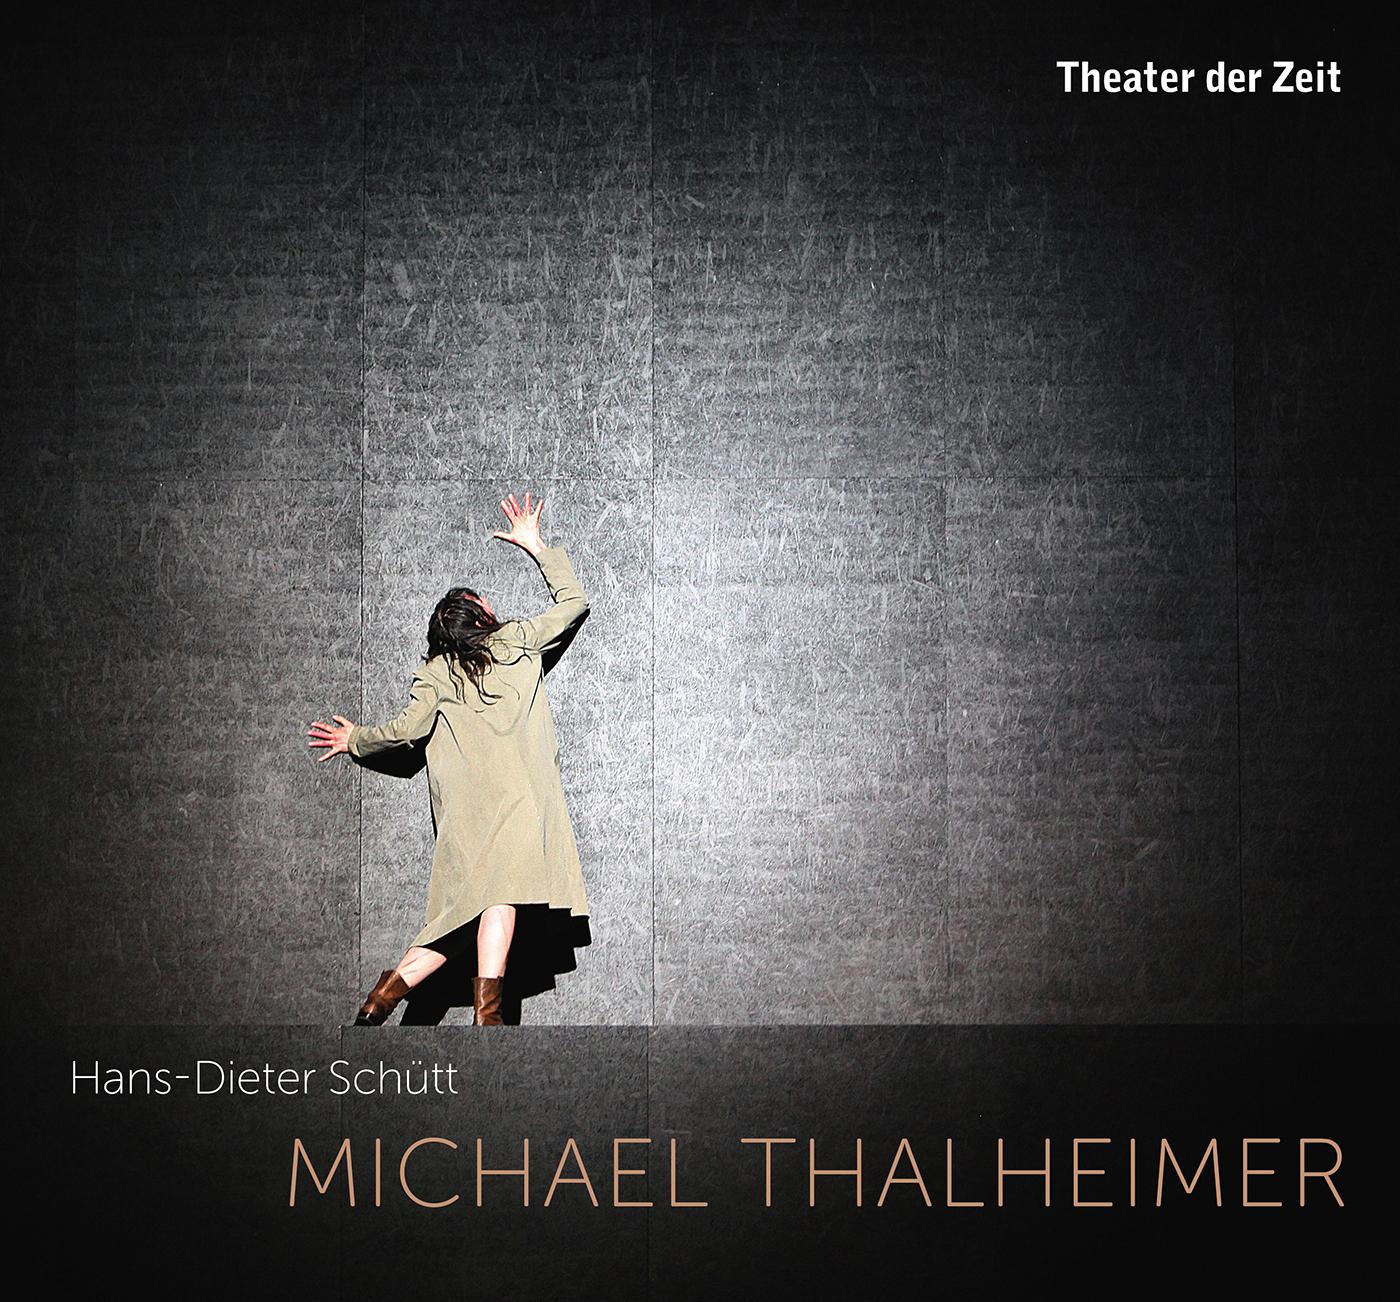 "MICHAEL THALHEIMER"